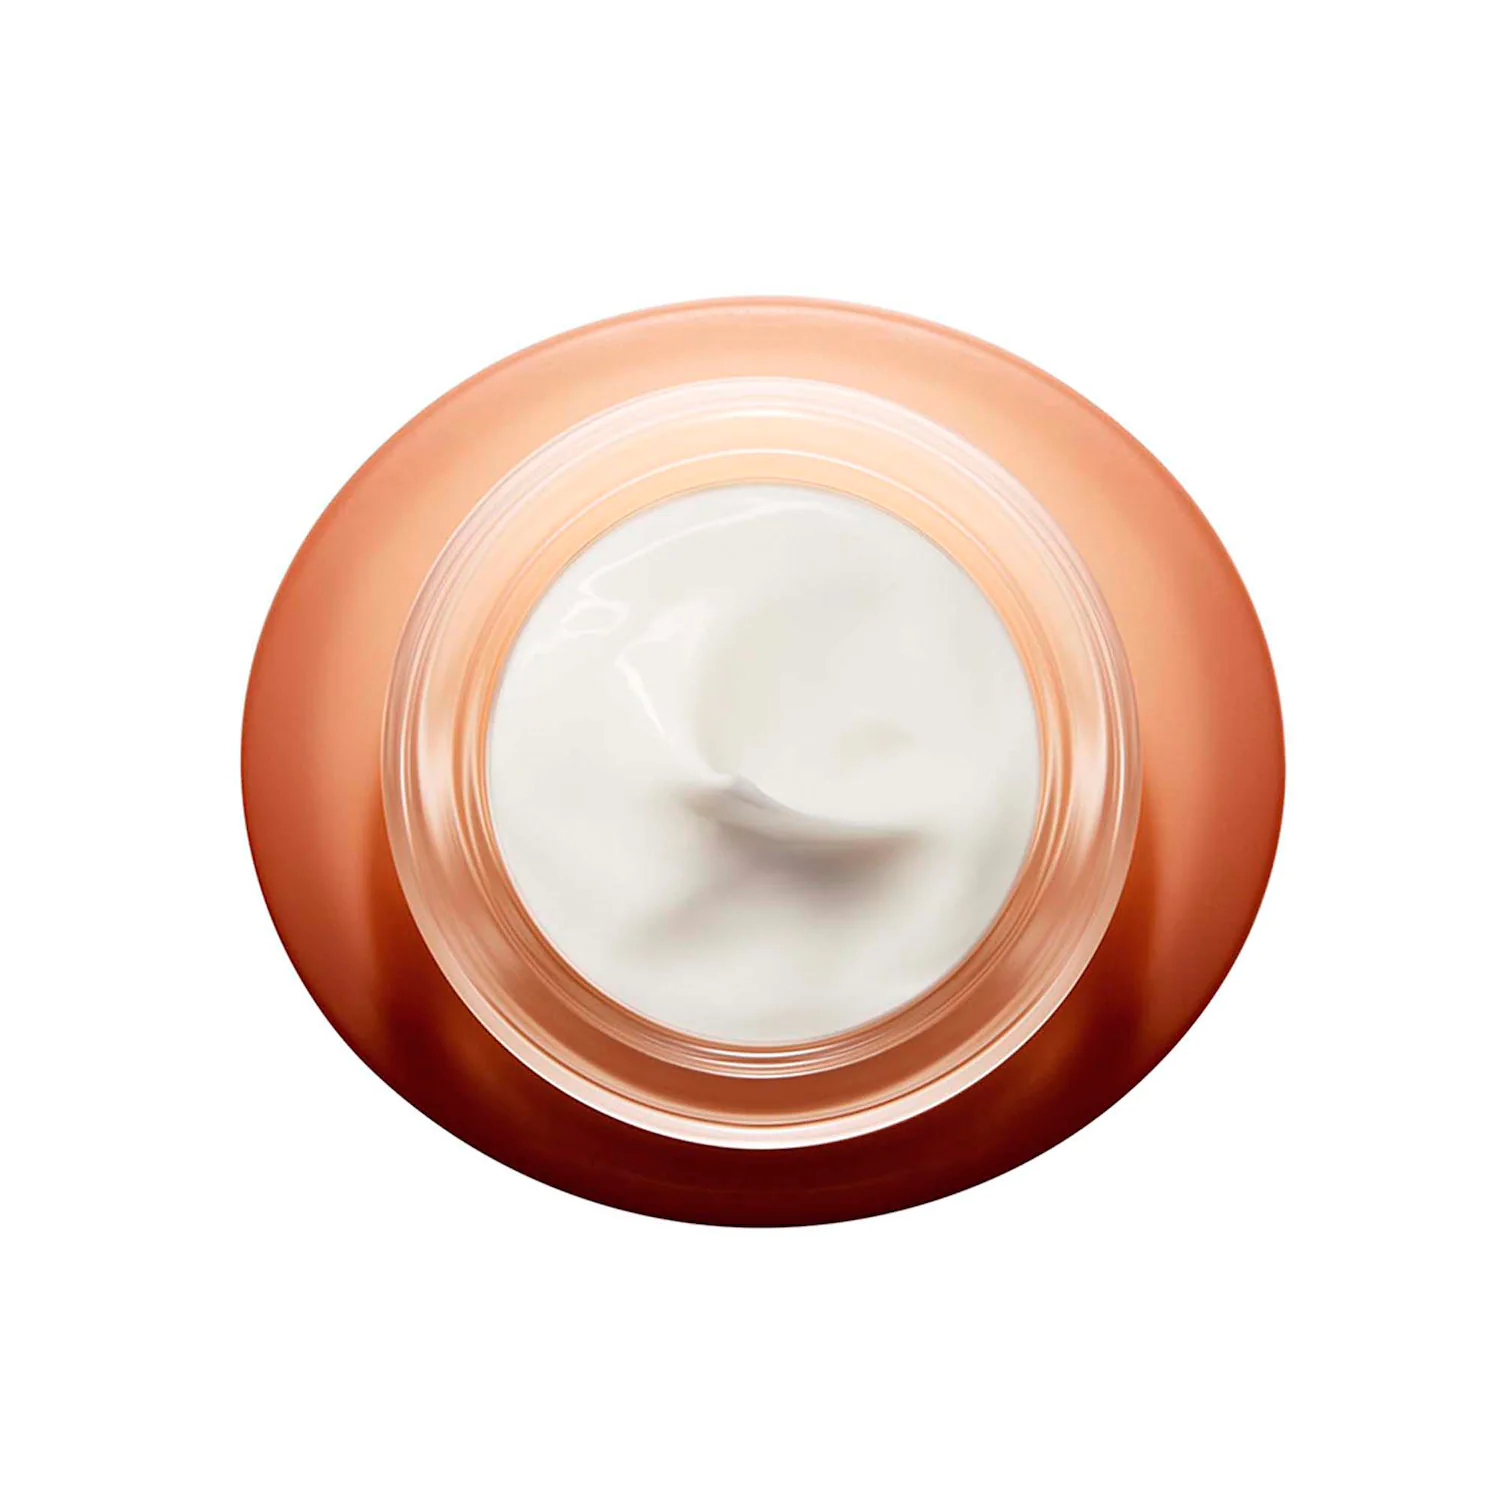 Clarins Extra Firming Night Cream Kuru Cilt İçin Gece Kremi 50 ml - Thumbnail